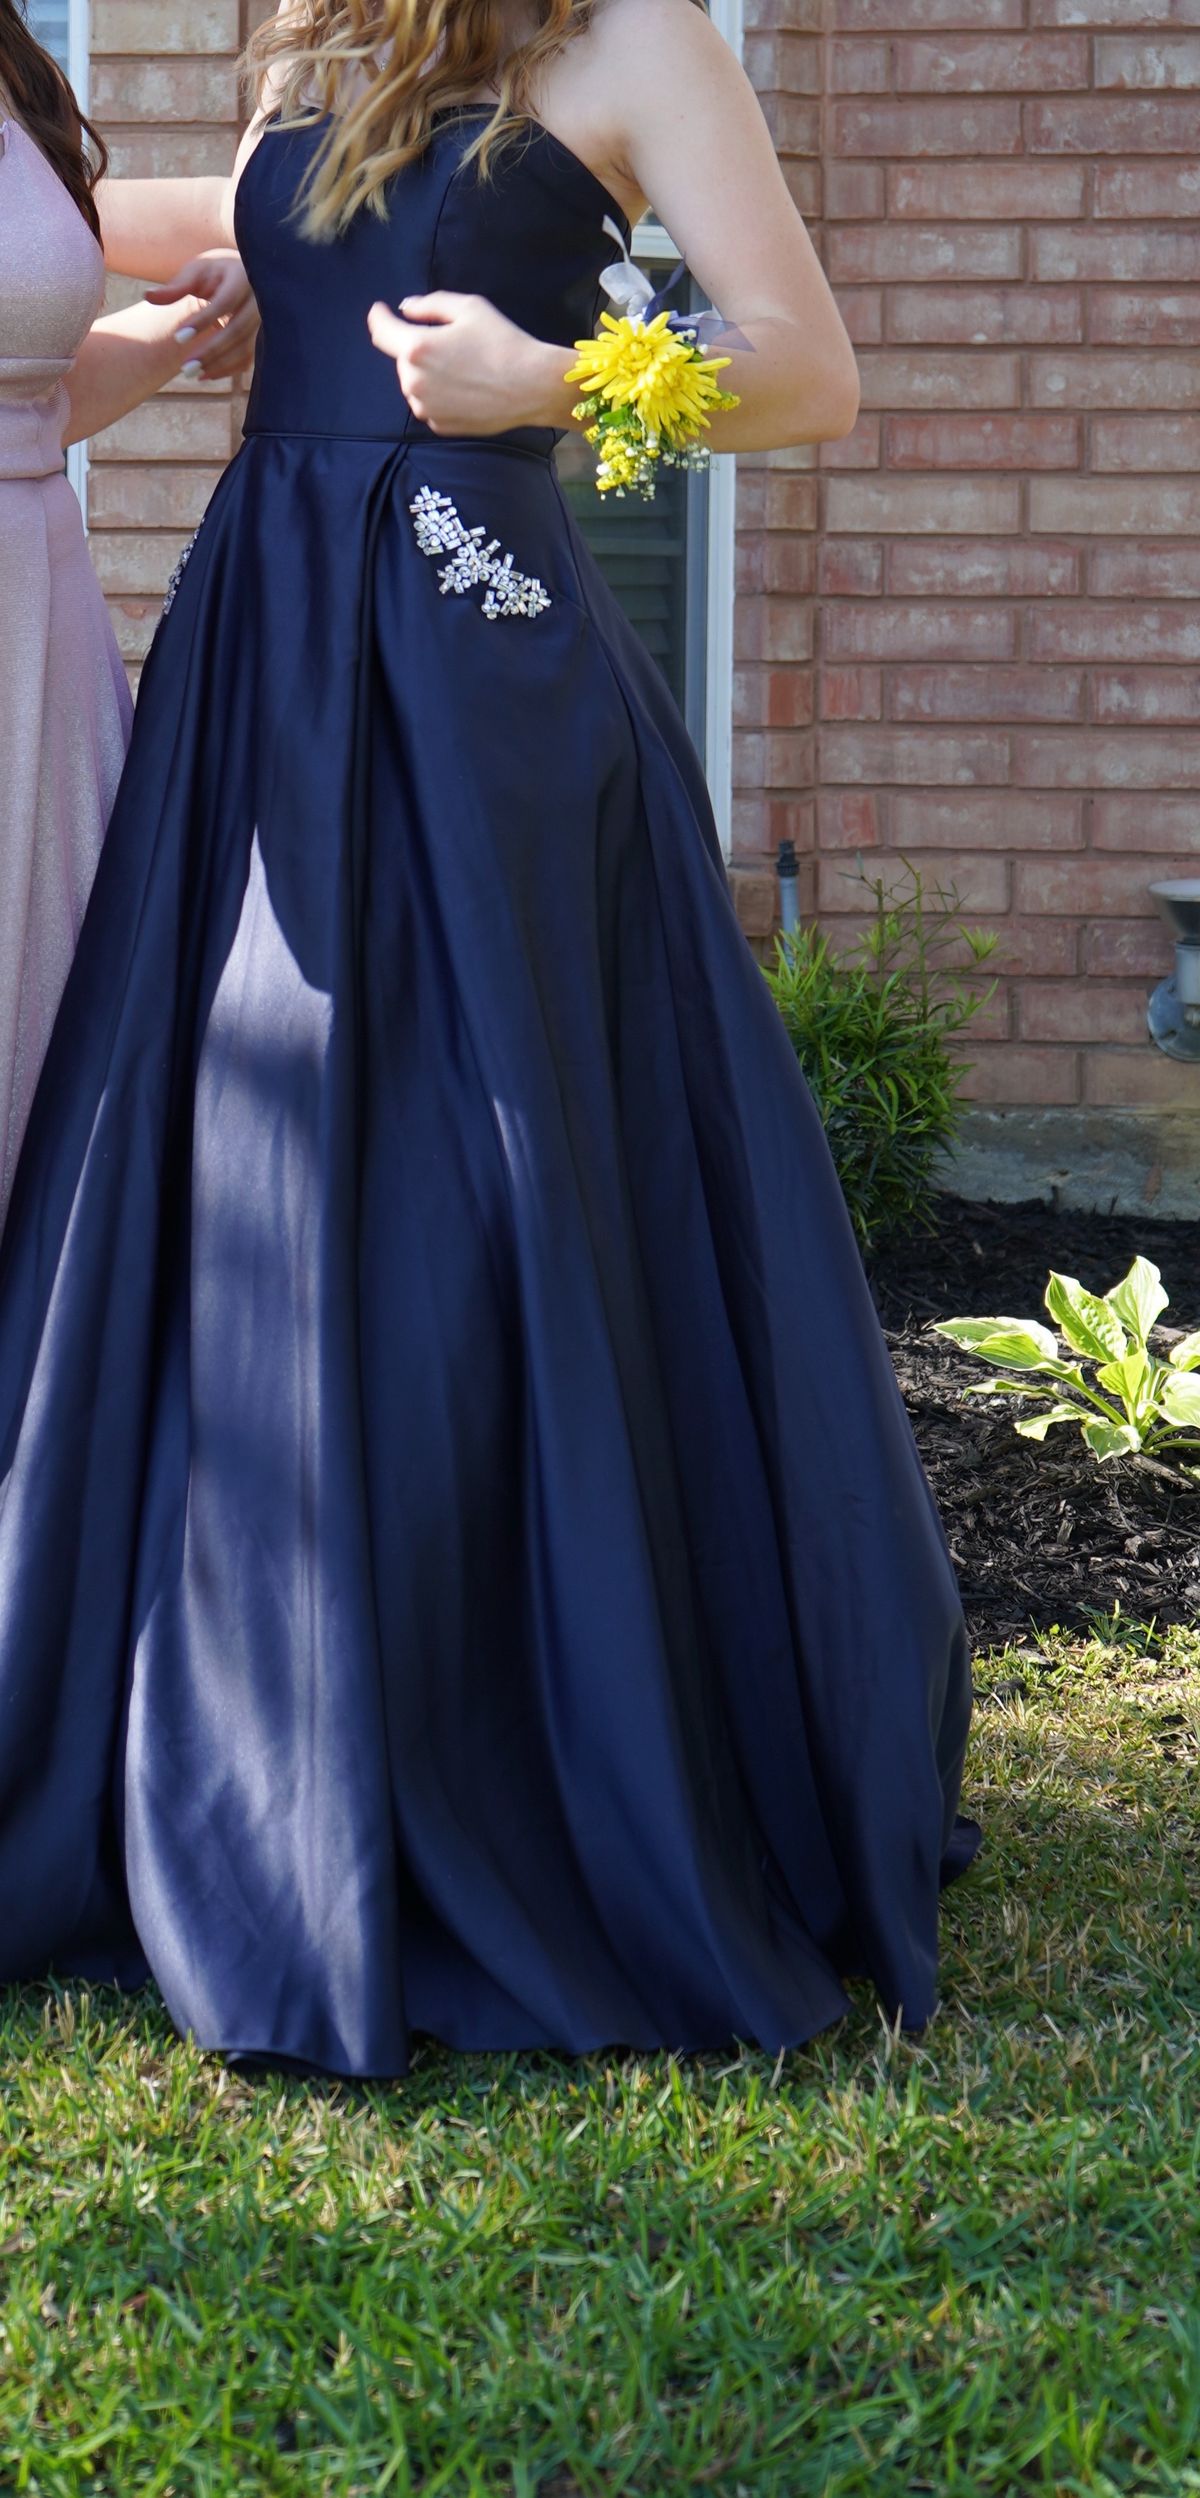 Von Maur Mermaid Dress | Prom Dress | Size 4 | Color: Black